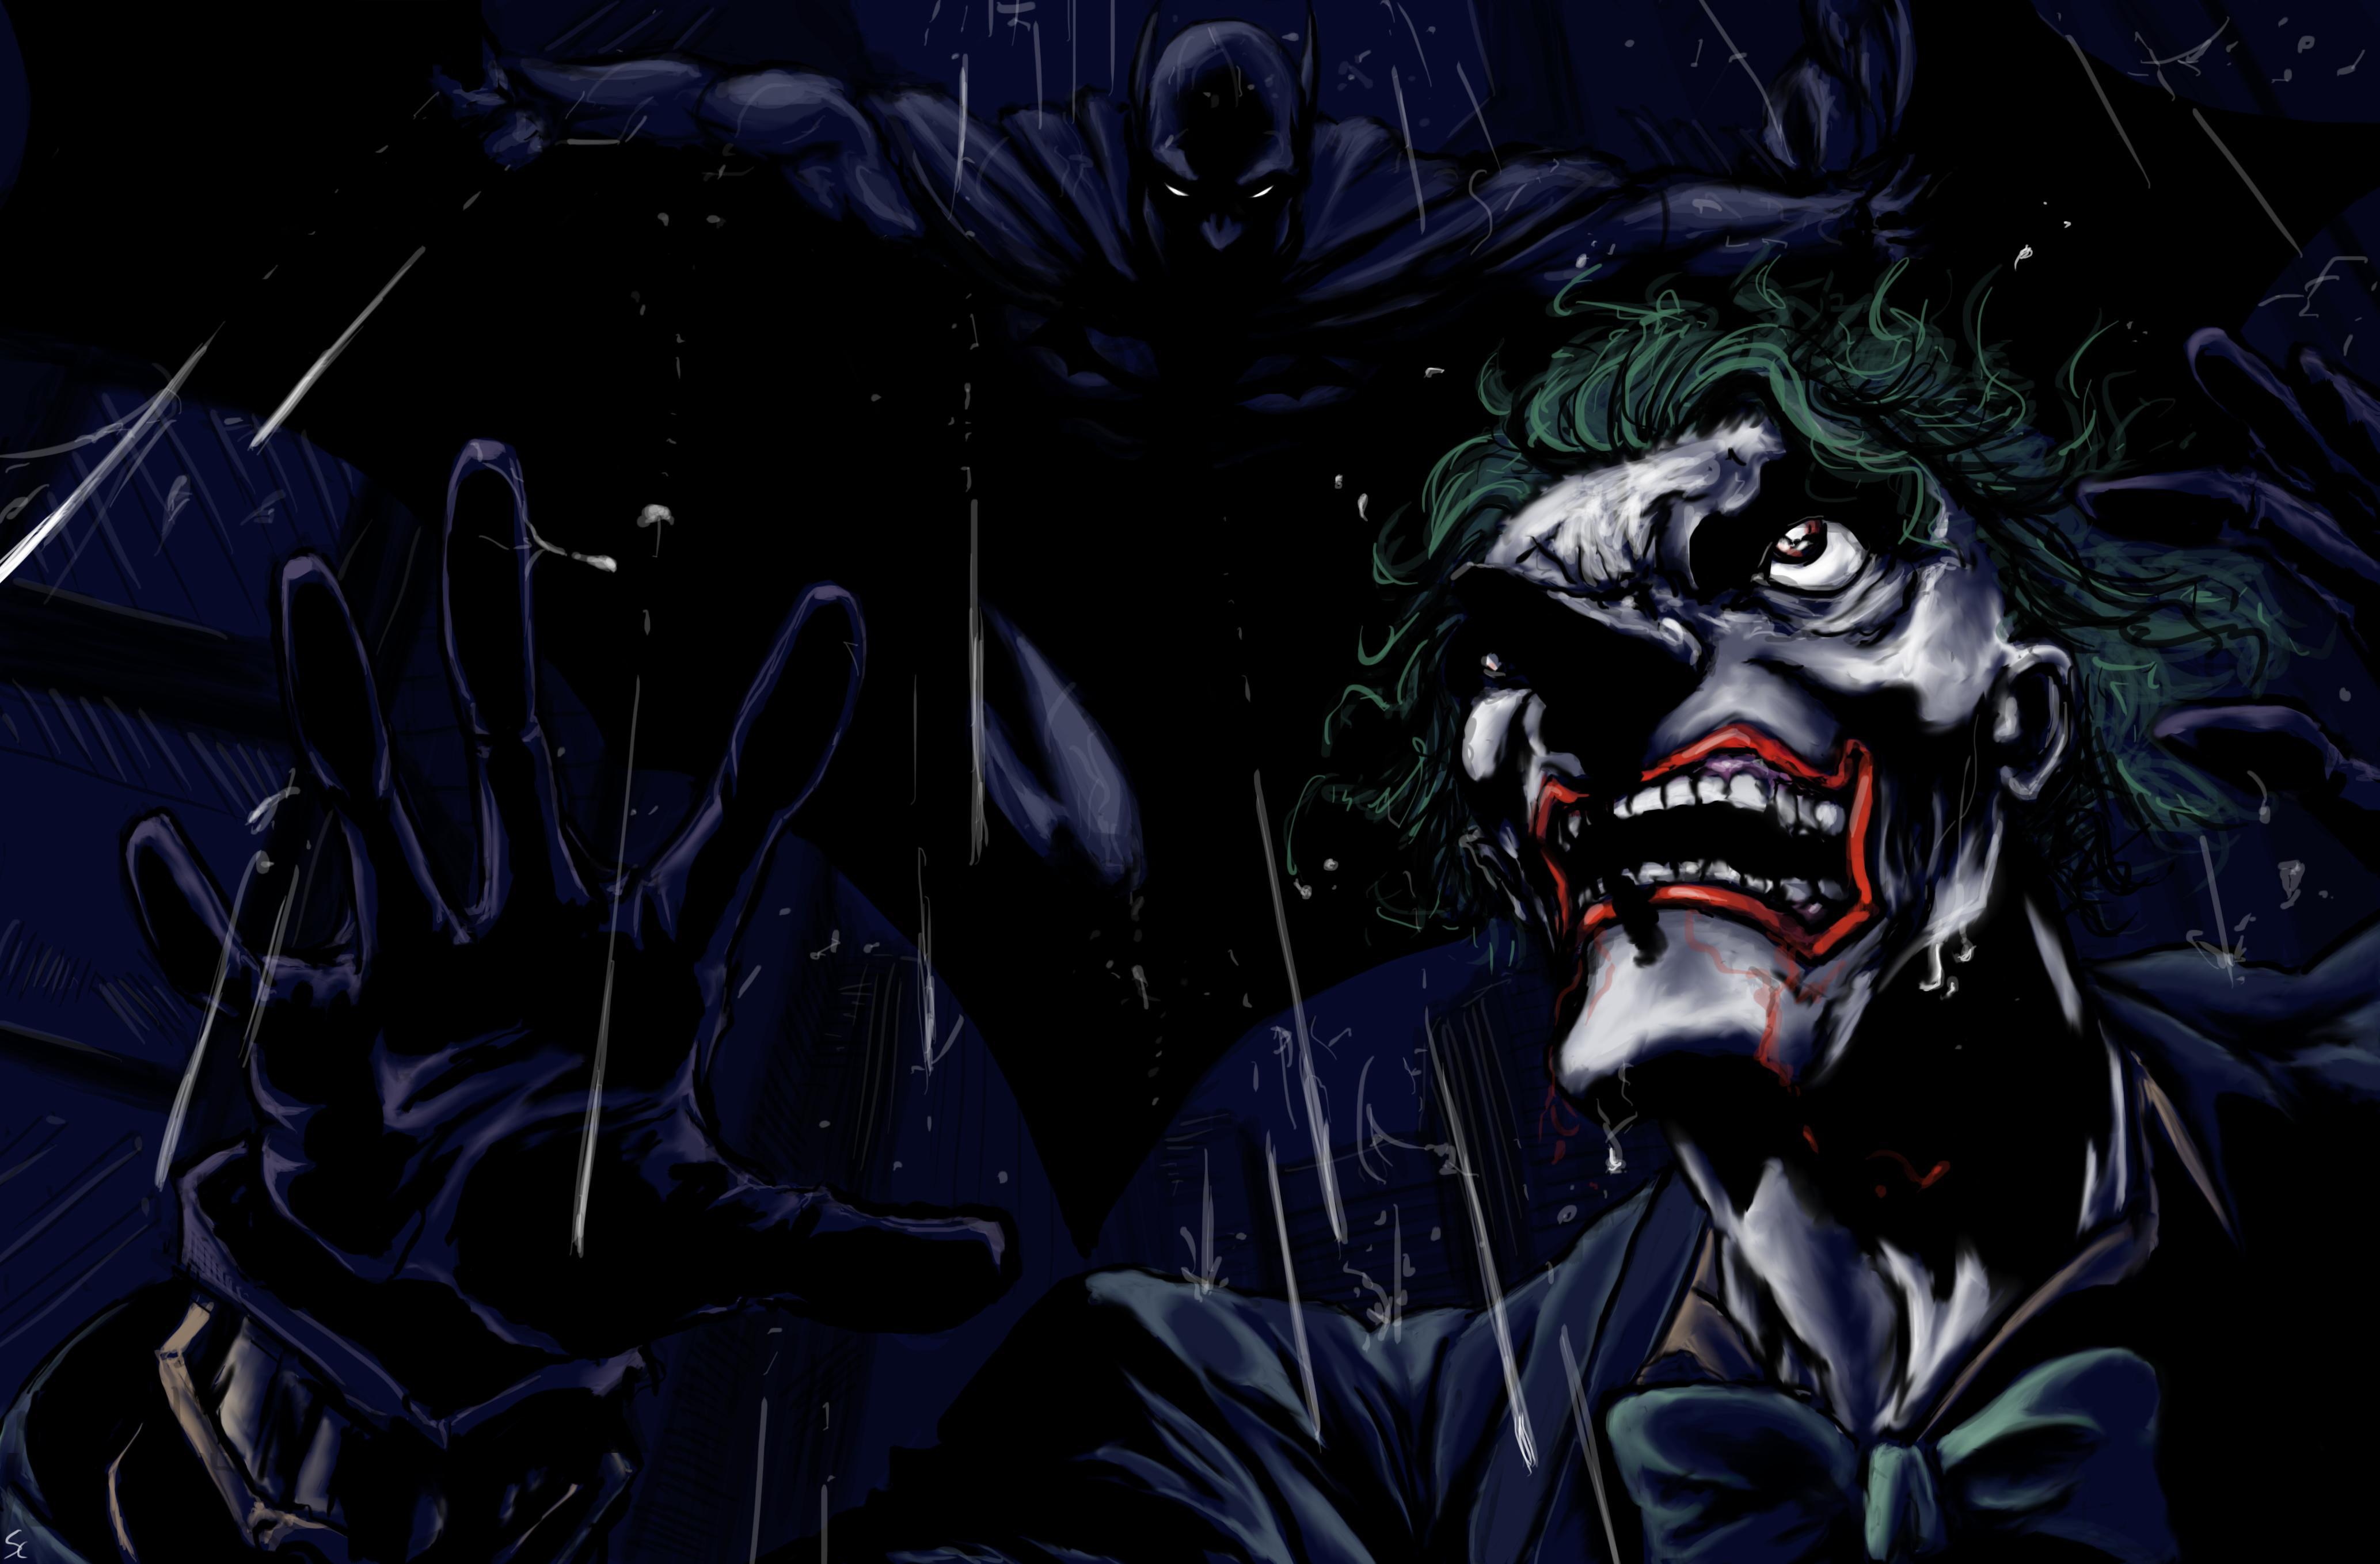 4K Ultra HD Joker Wallpaper and Background Image